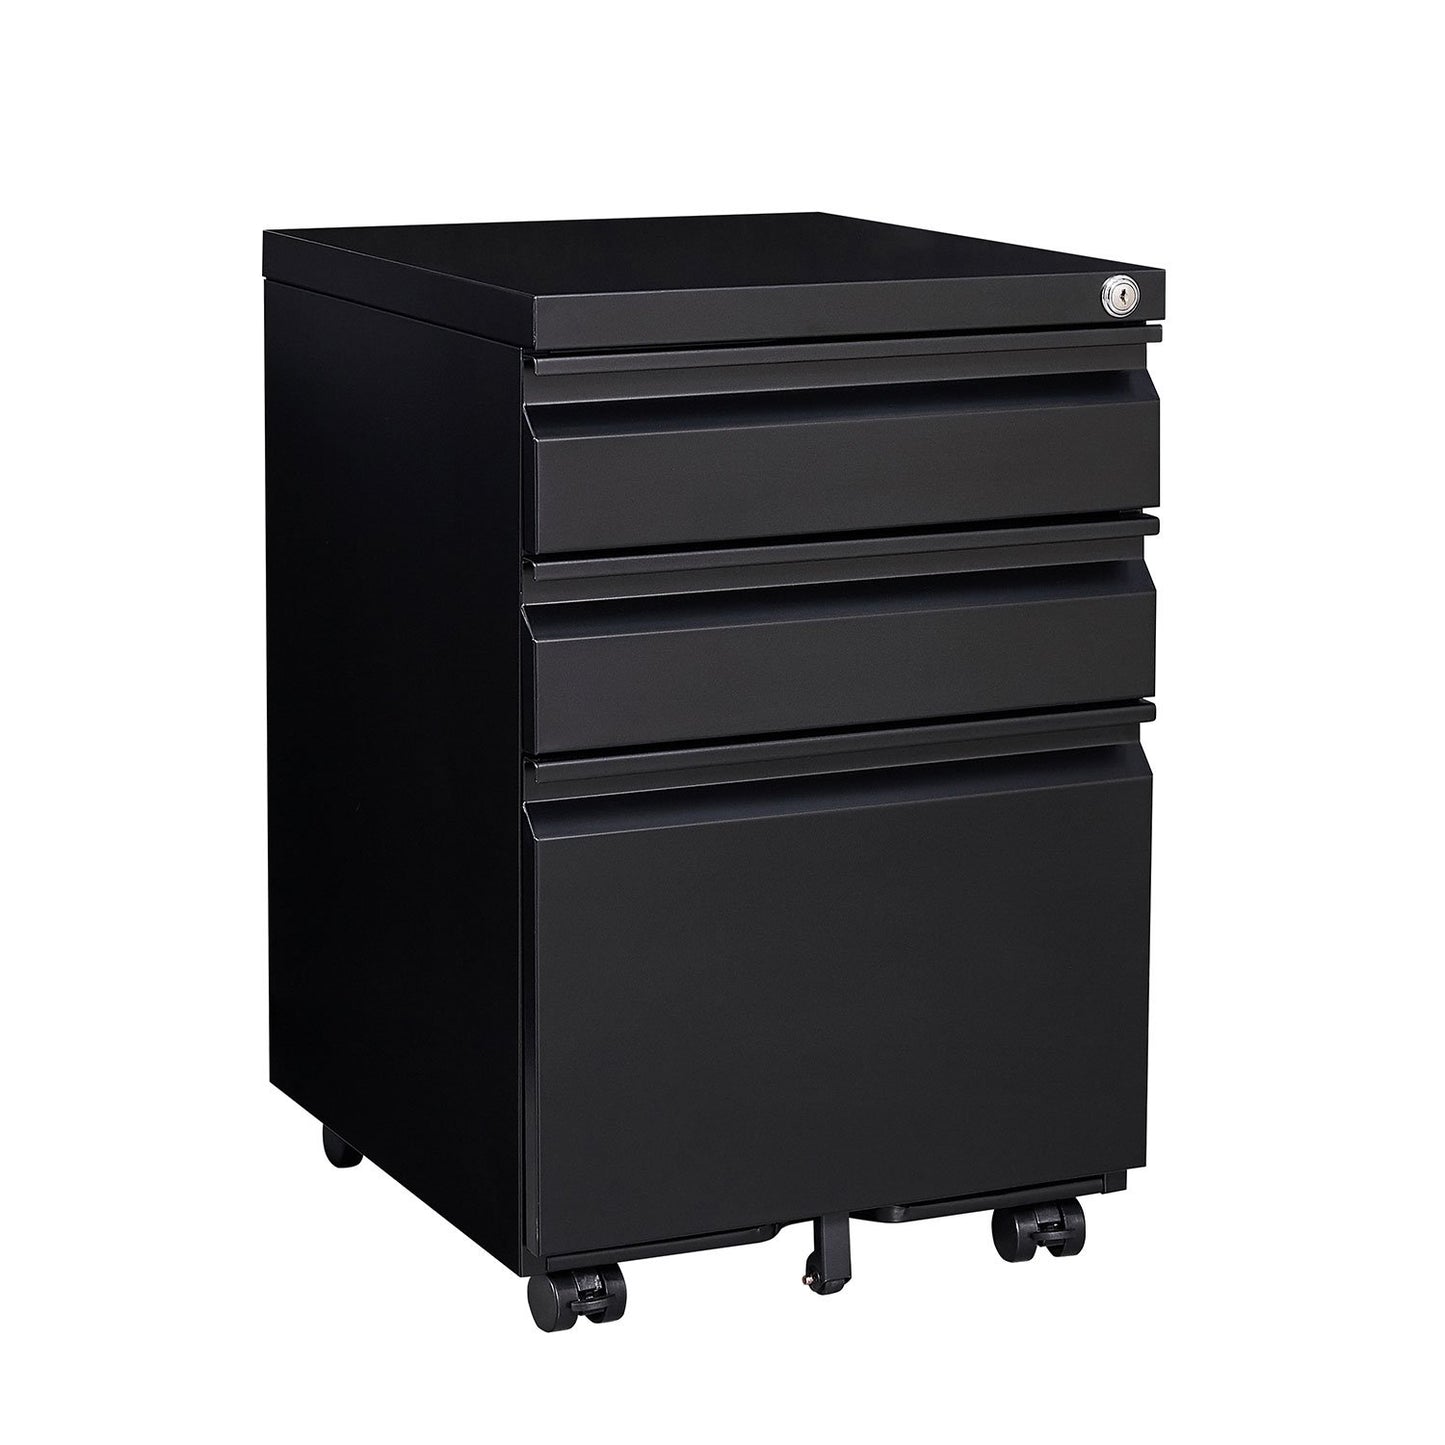 Gewnee 3 Drawer Mobile Office File Cabinet with Lock, Under Desk Metal Movable Filing Cabinet, Lateral Storage Cabinet,Black